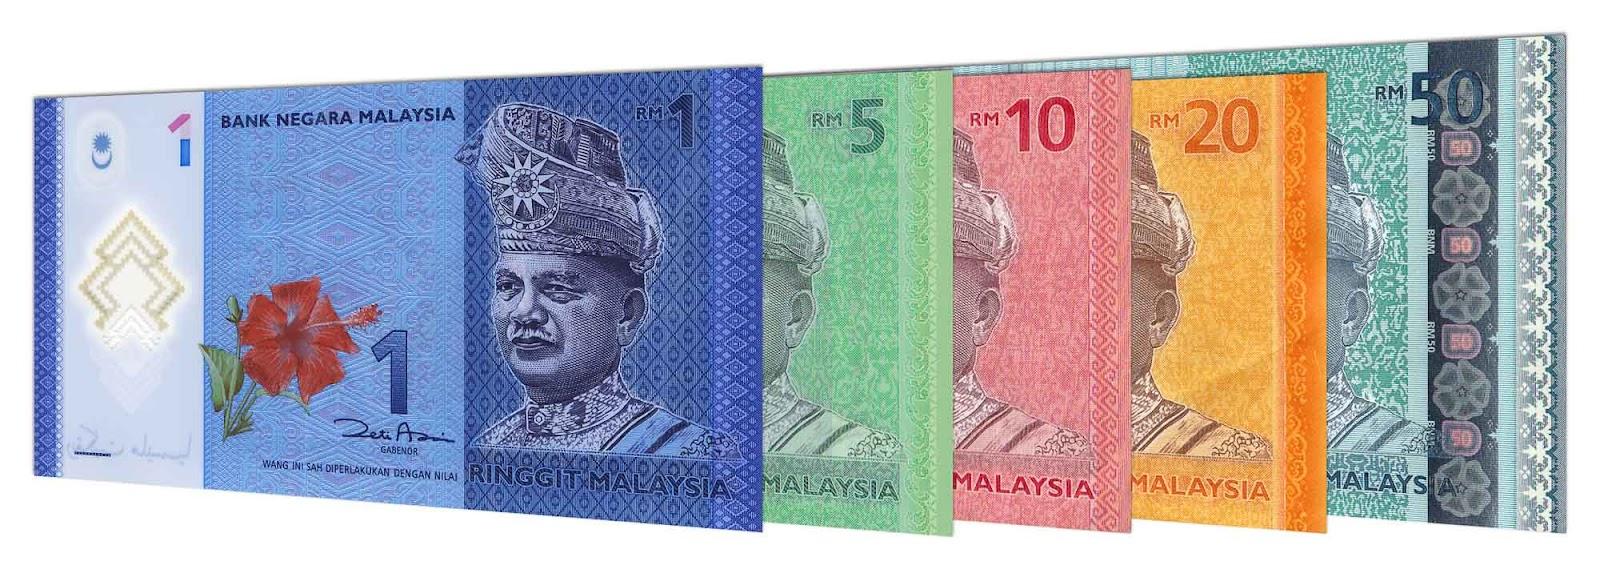 Malaysian Ringgit banknote series 